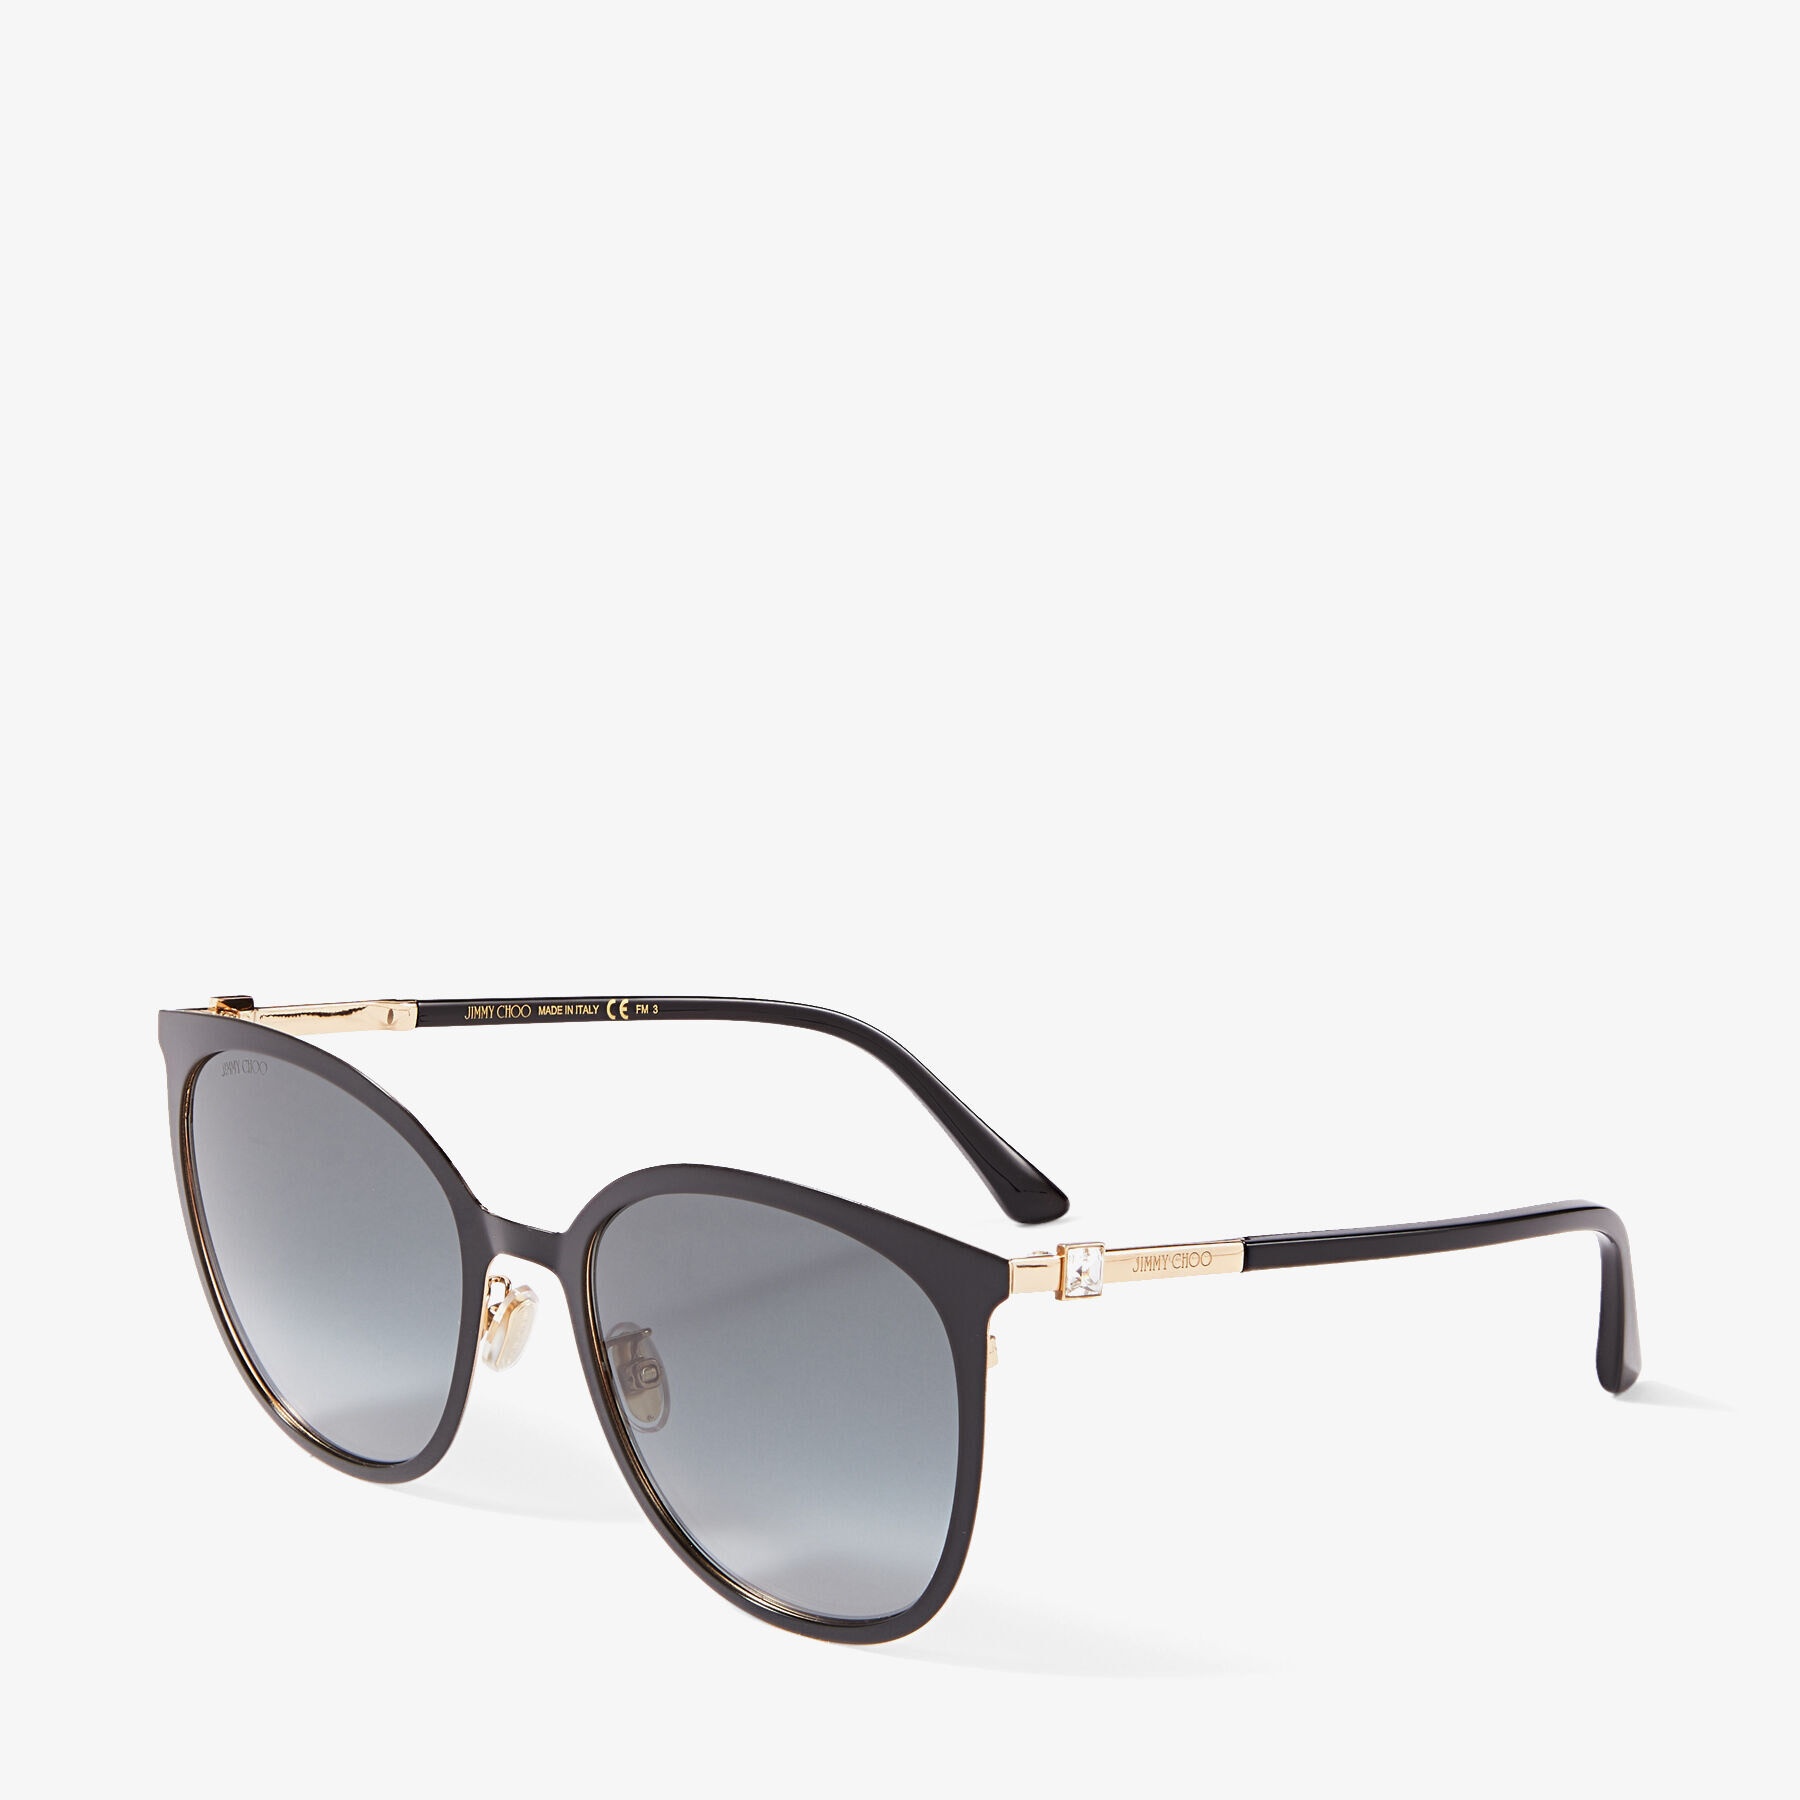 Oria
Black Cat-Eye Sunglasses with Swarovski Crystals - 3